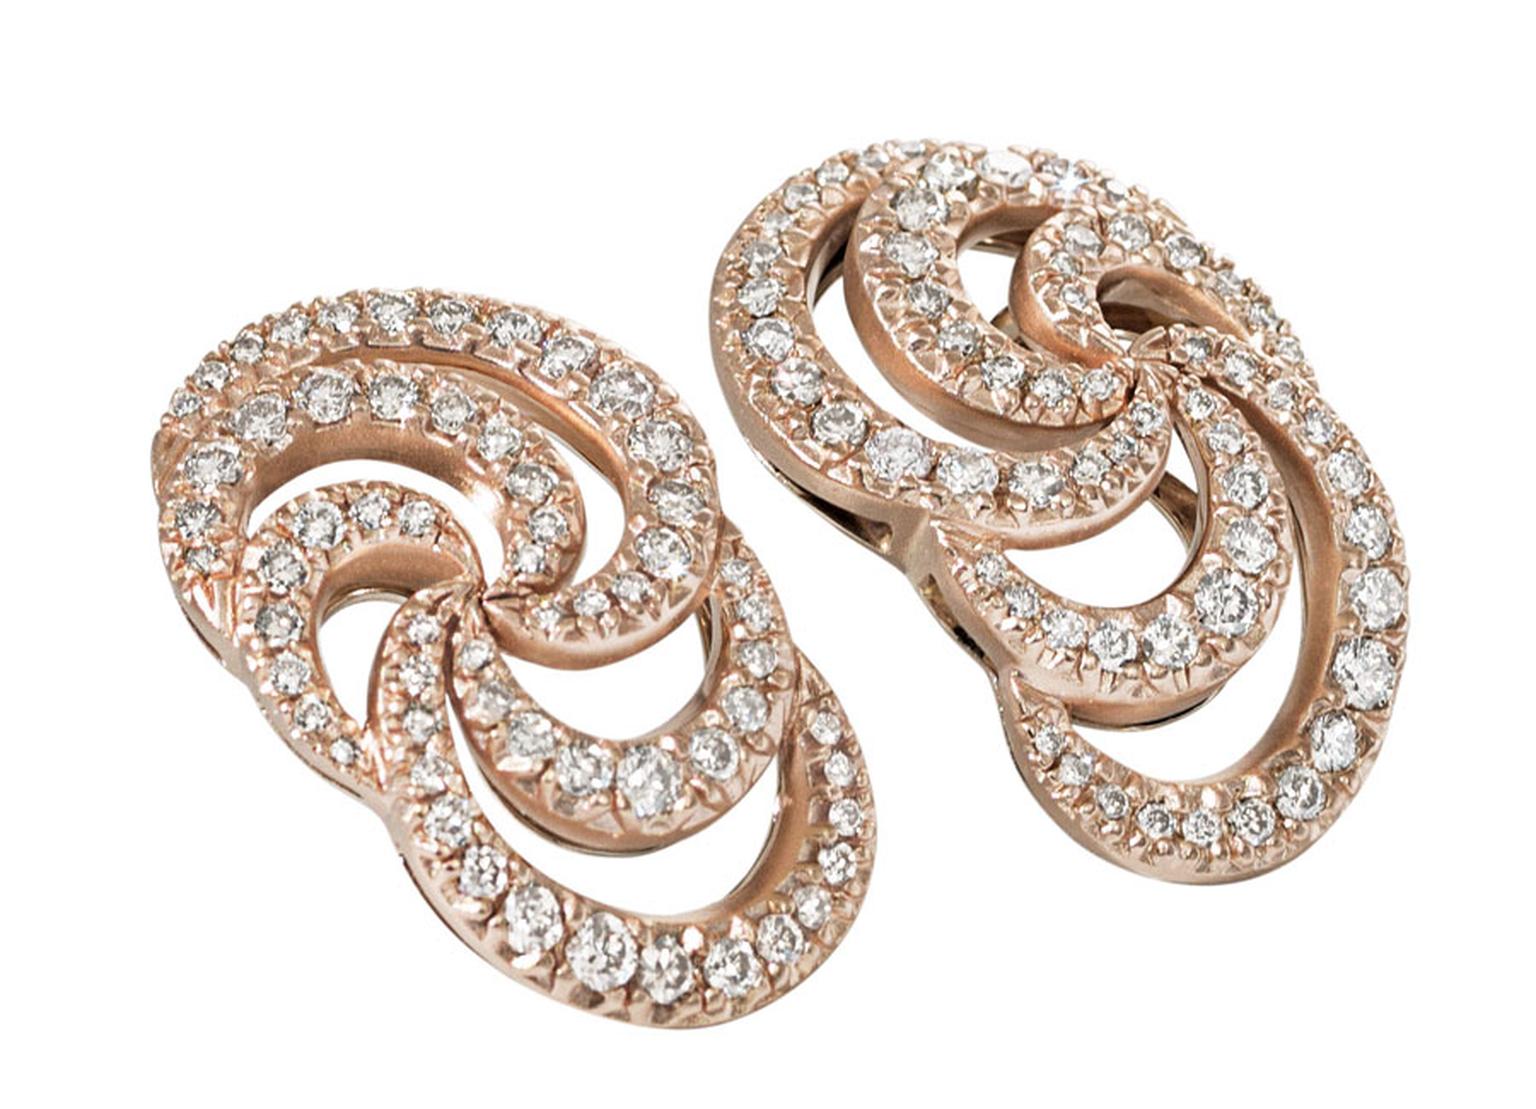 H-Stern-Earrings-in-rose-gold-with-diamonds-.jpg